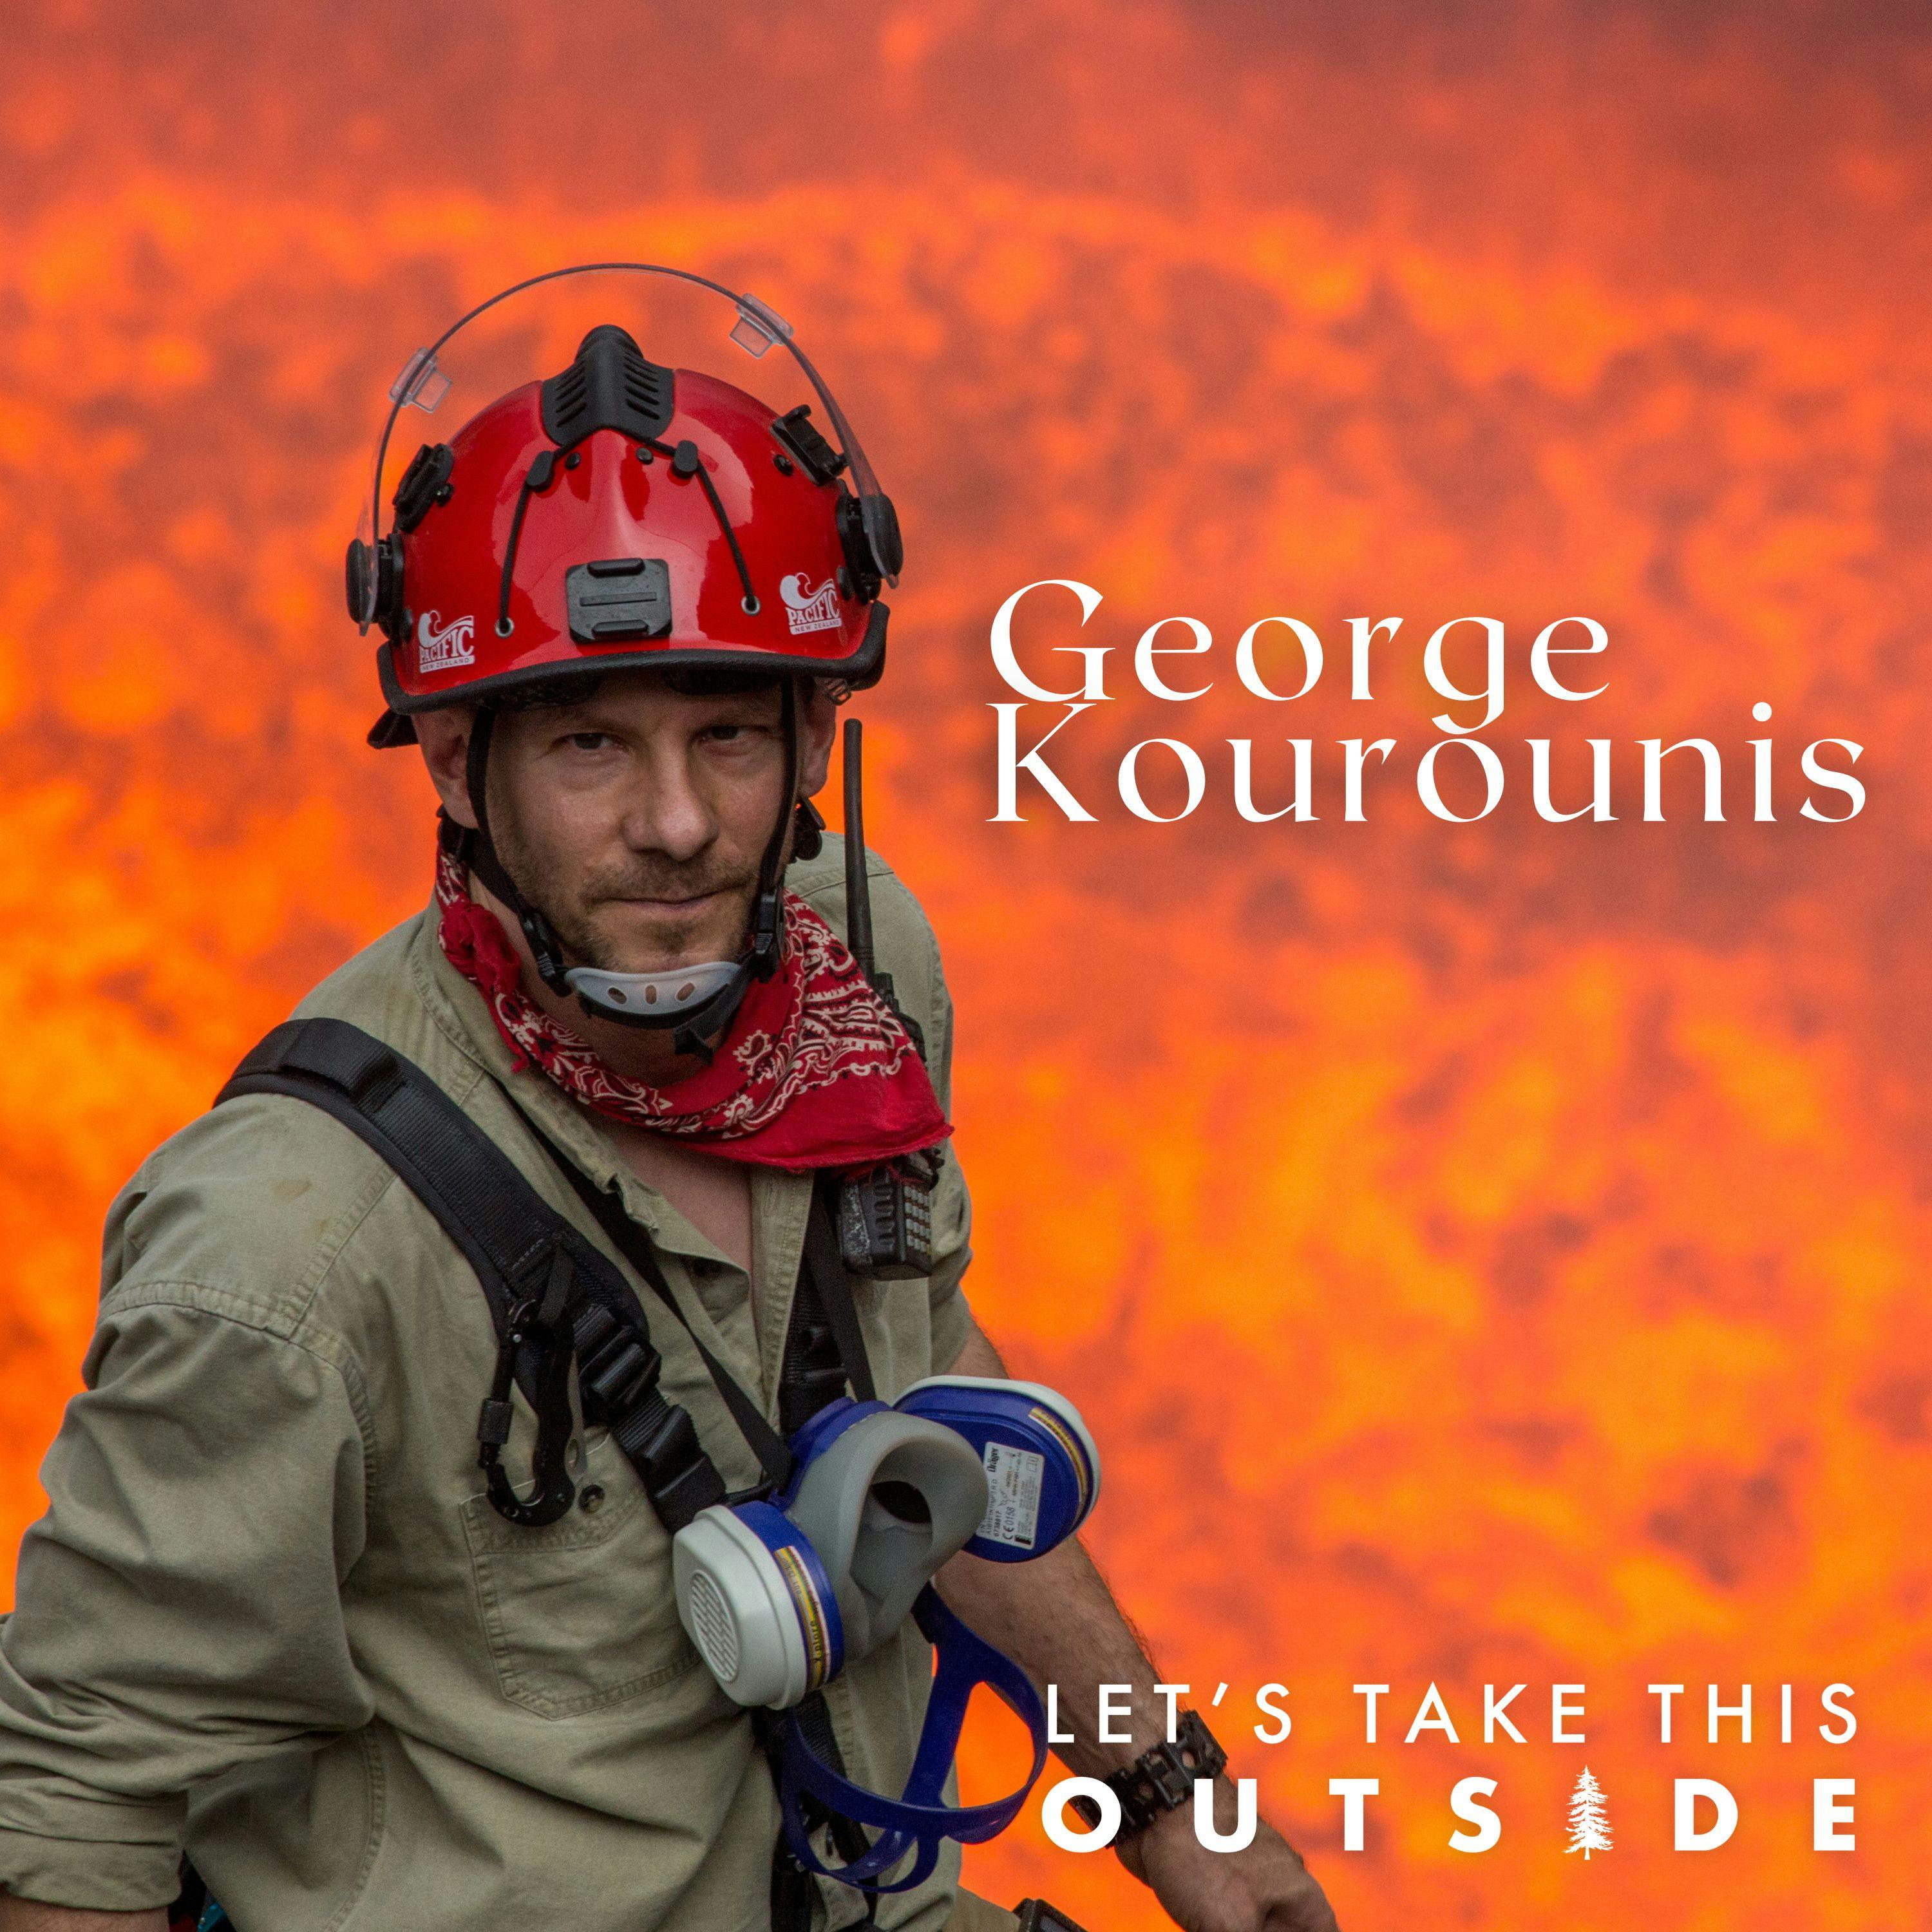 George Kourounis - Global Adventurer & Storm Chaser